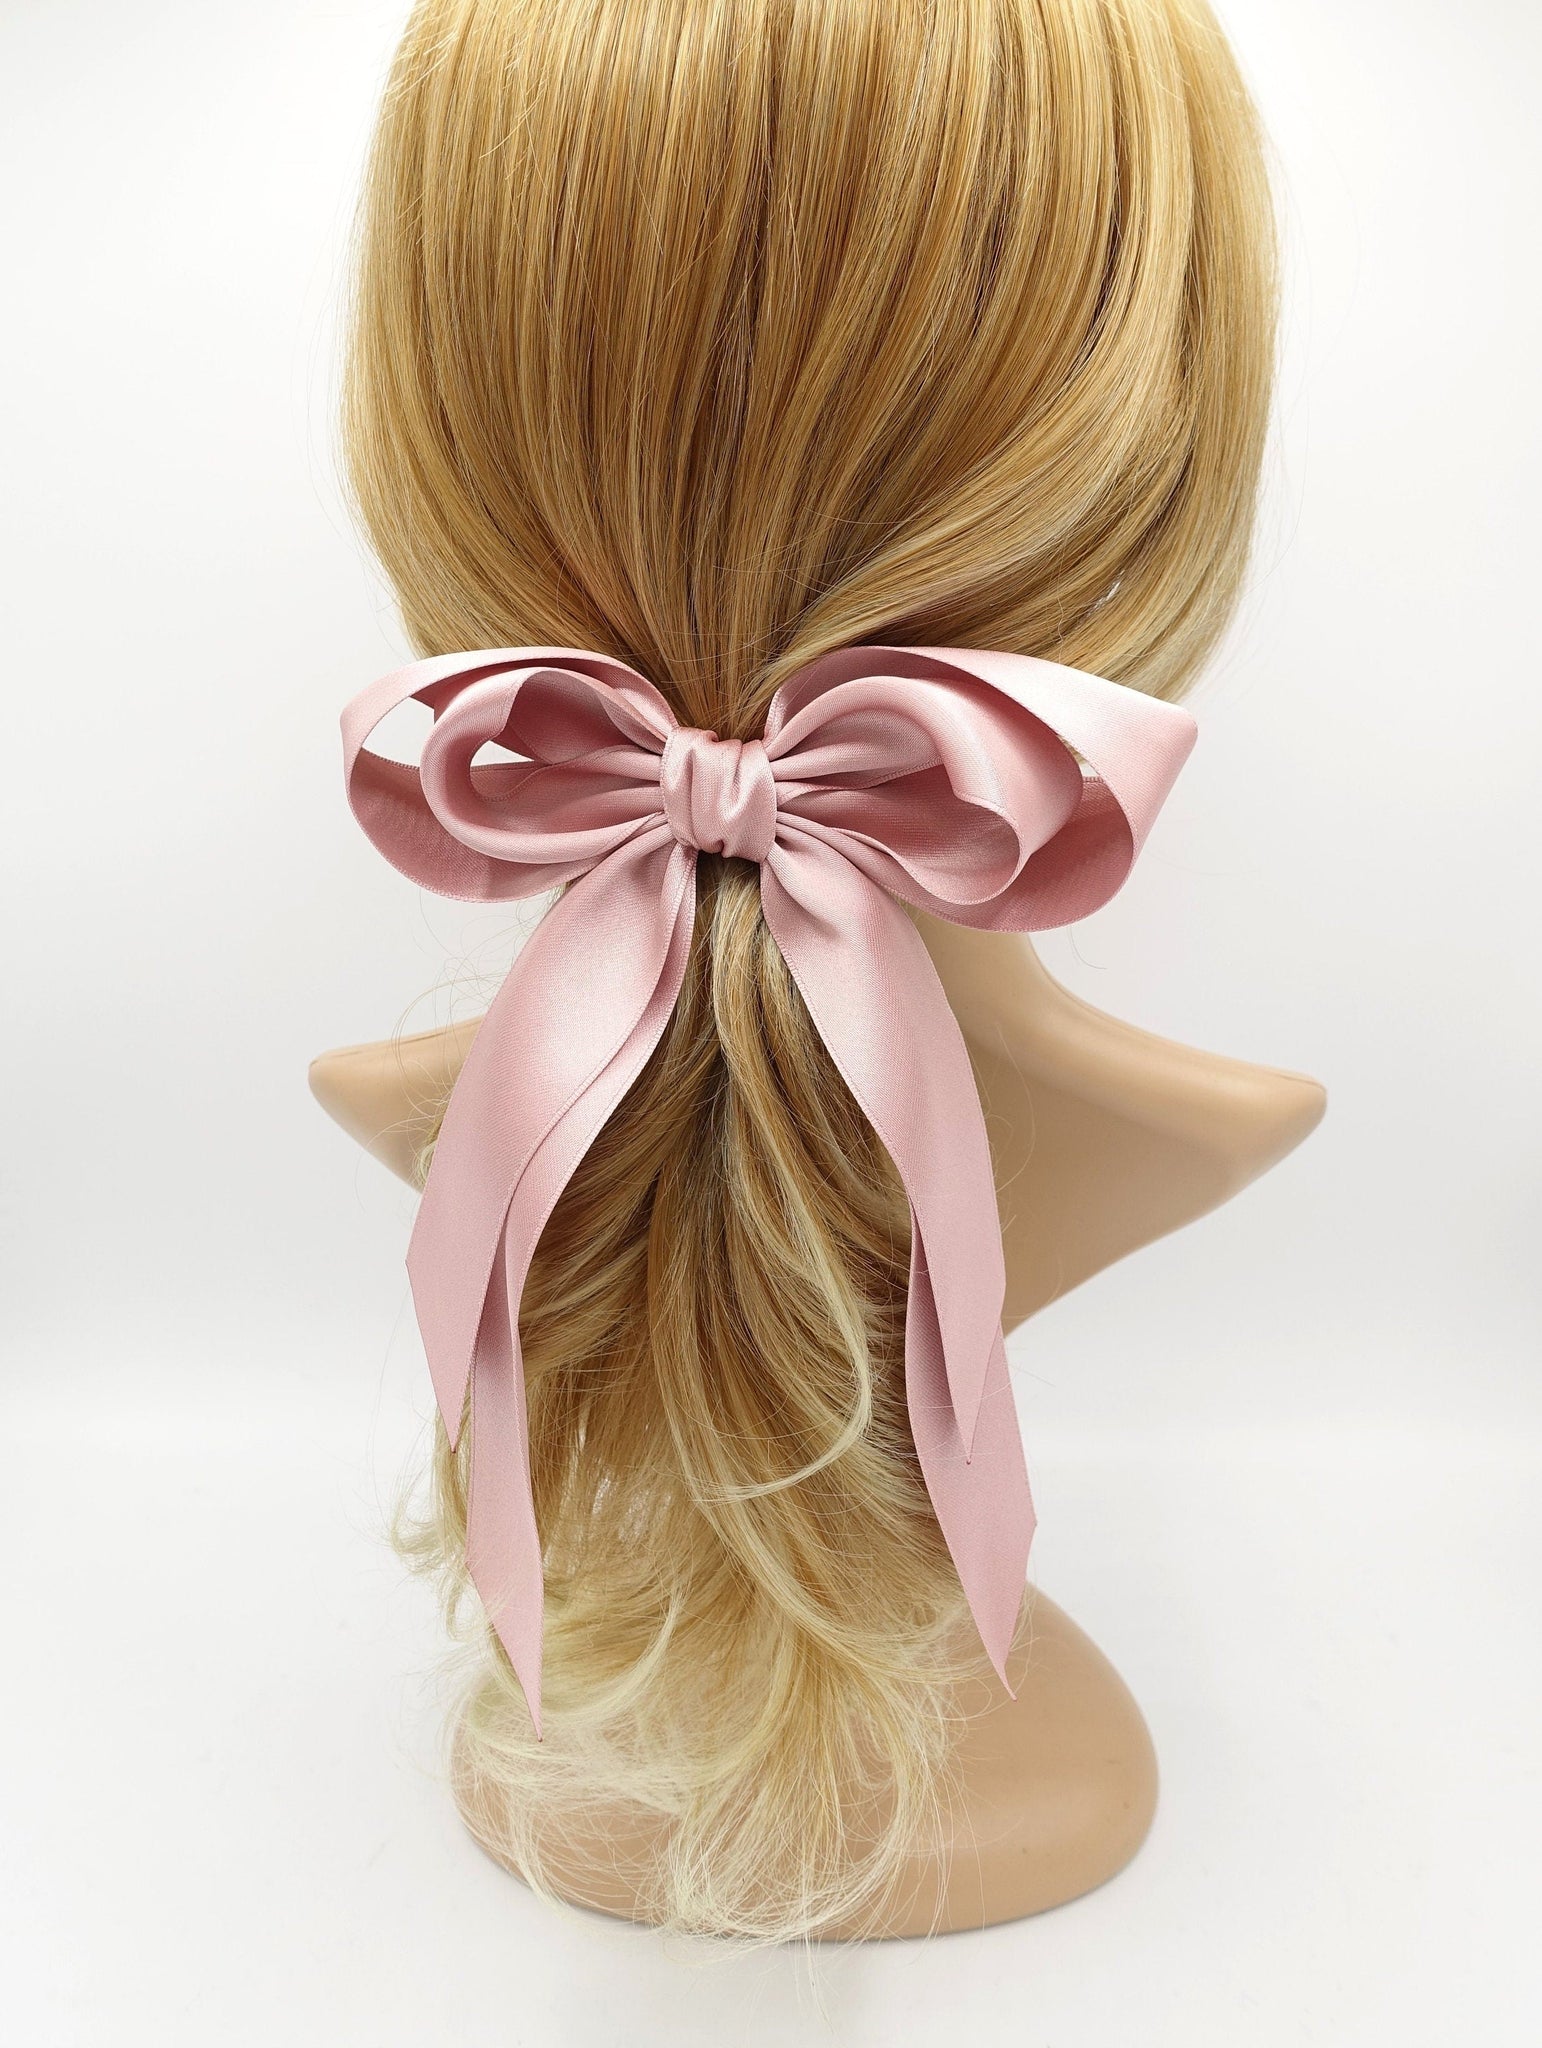 veryshine.com Barrette (Bow) Blush pink satin layered double tail hair bow